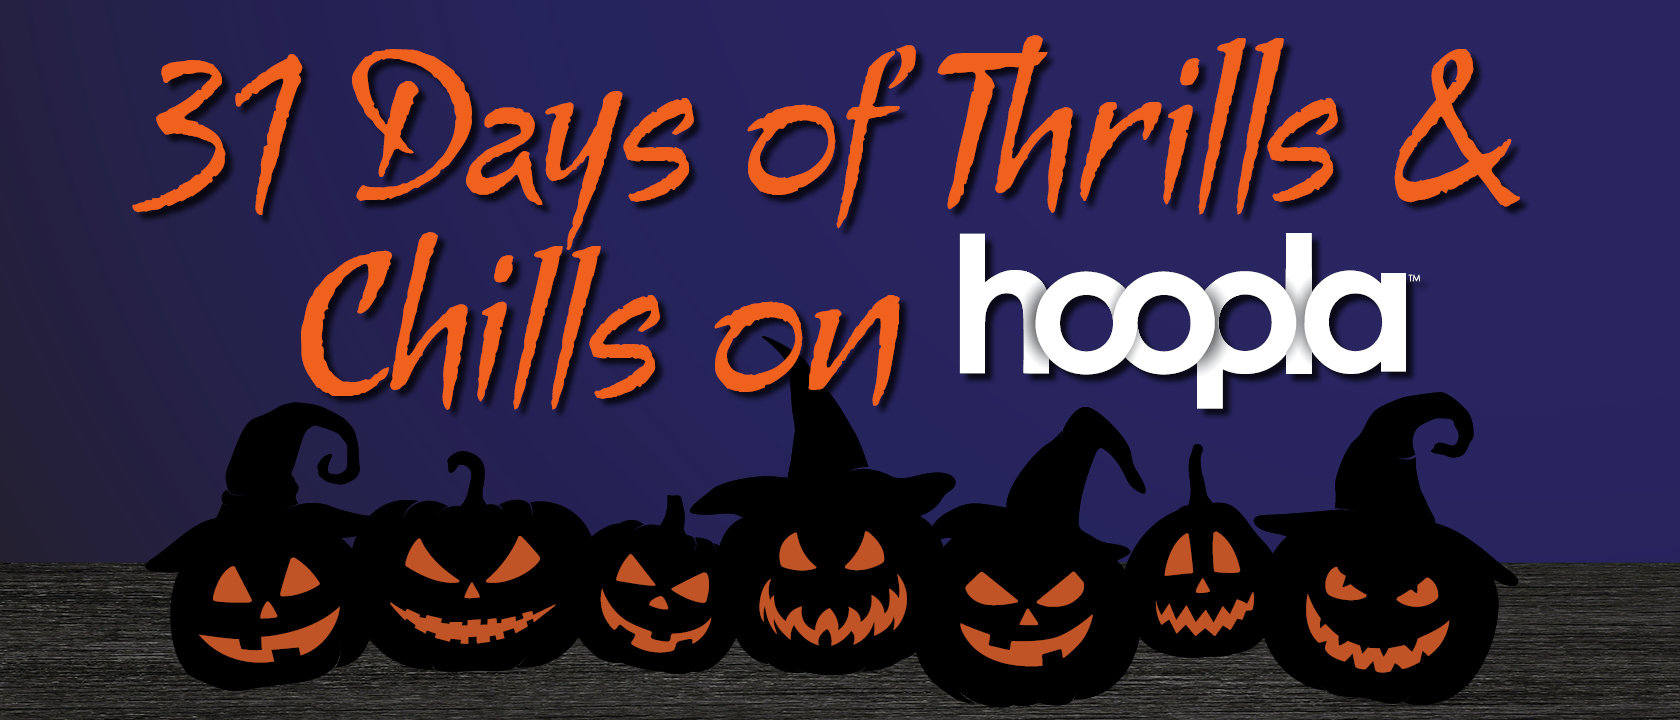 31 days of thrills & chills hoopla graphic